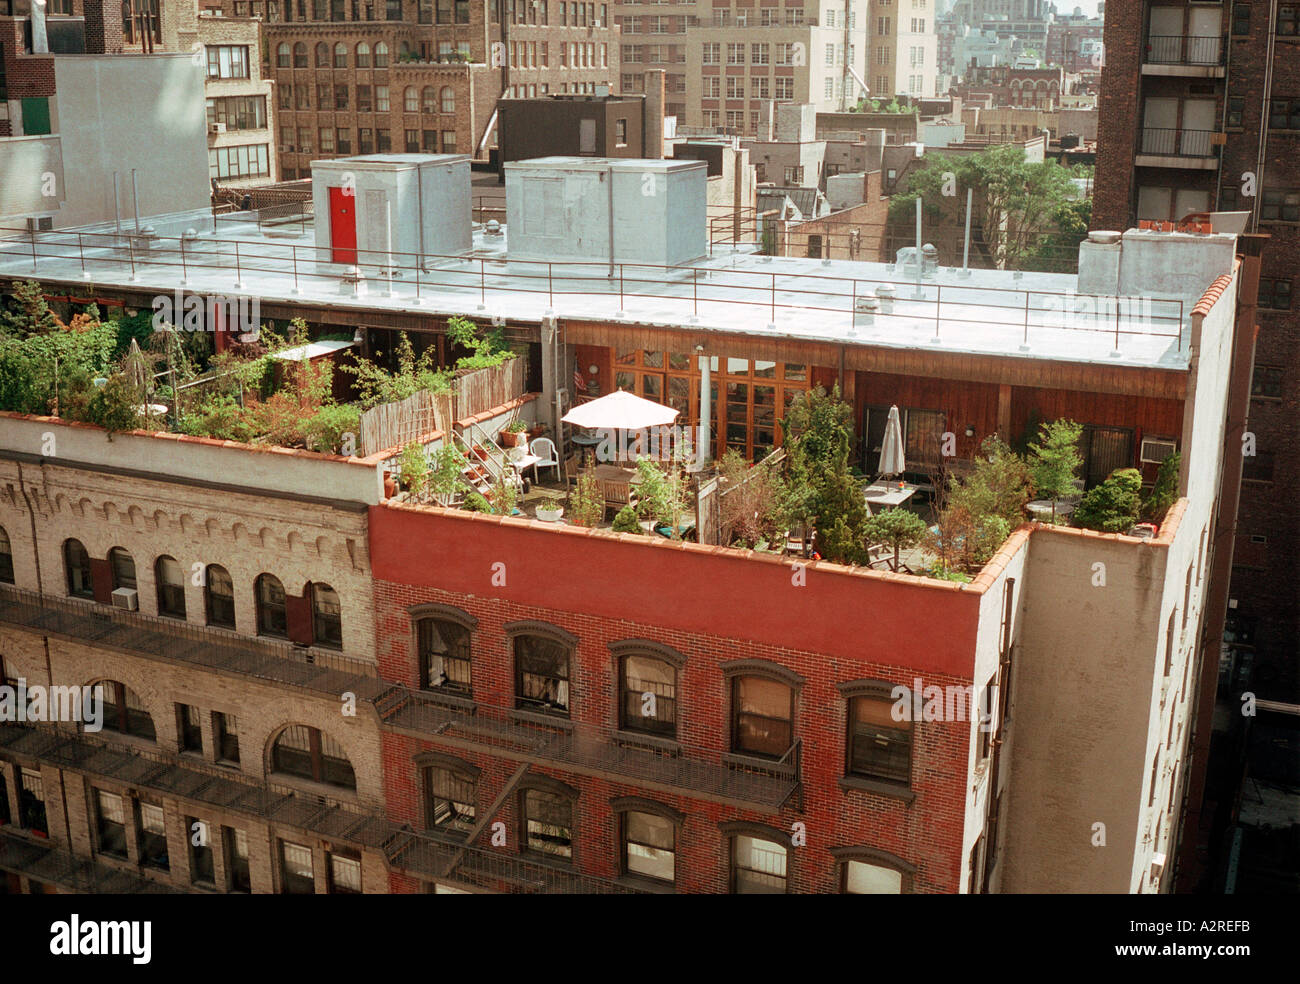 Garden terraces in an urban environment in Chelsea Stock Photo